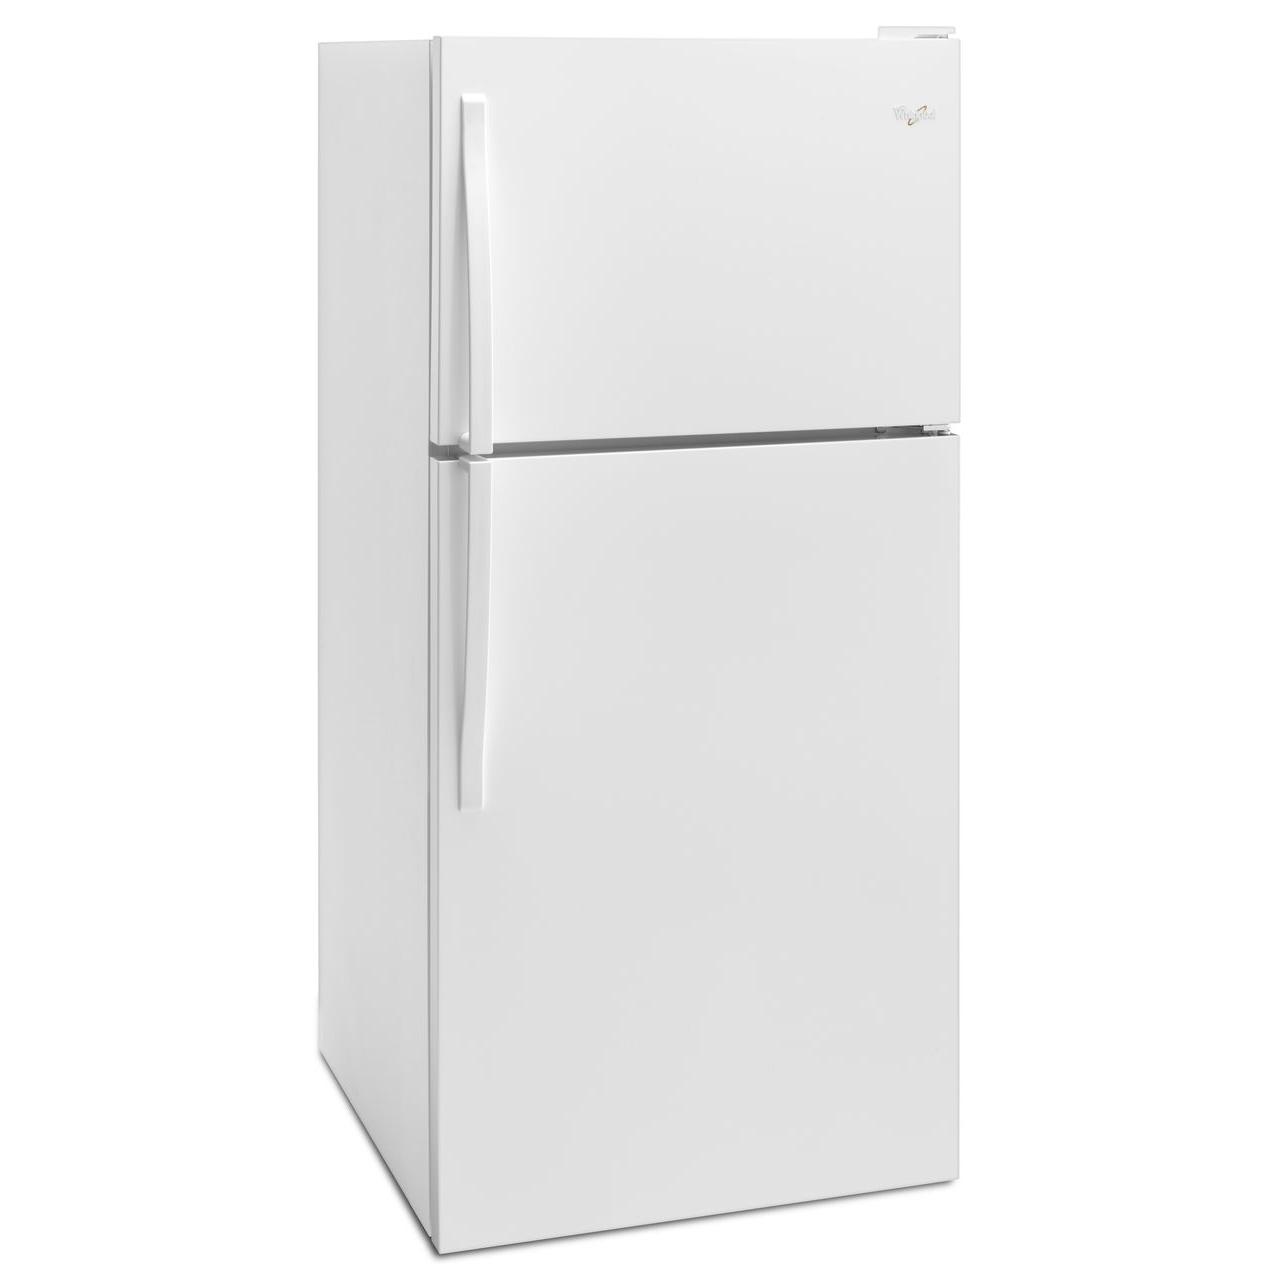 Whirlpool 30-inch, 18.2 cu. ft. Freestanding Top Freezer Refrigerator with Quiet Cooling WRT108FZDW